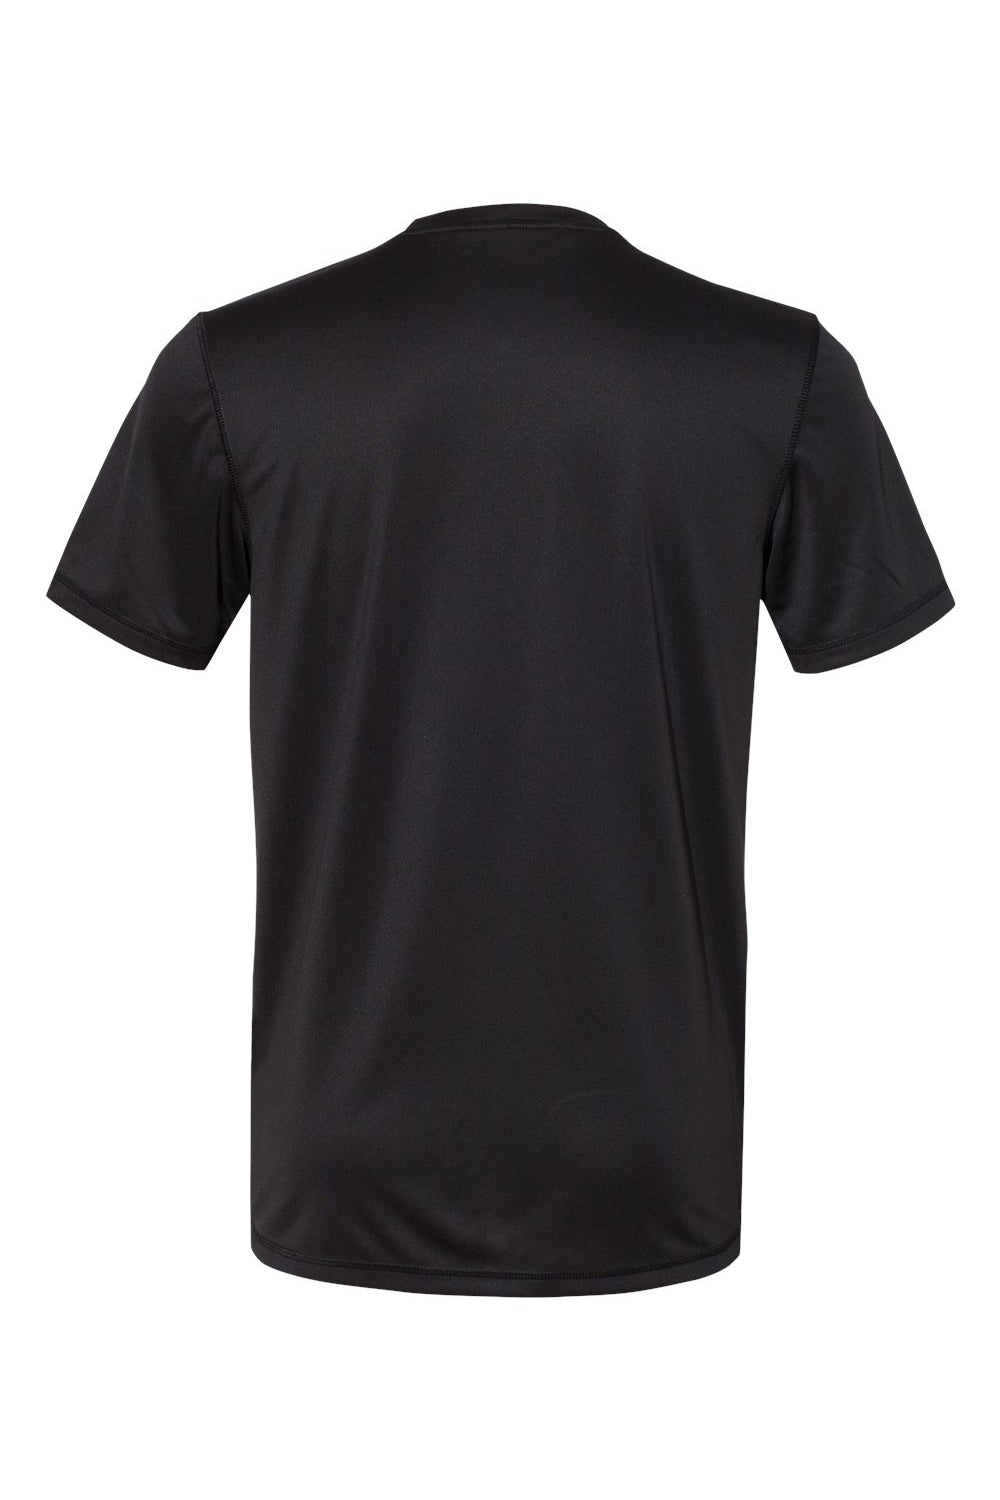 Adidas A376 Mens Short Sleeve Crewneck T-Shirt Black Flat Back